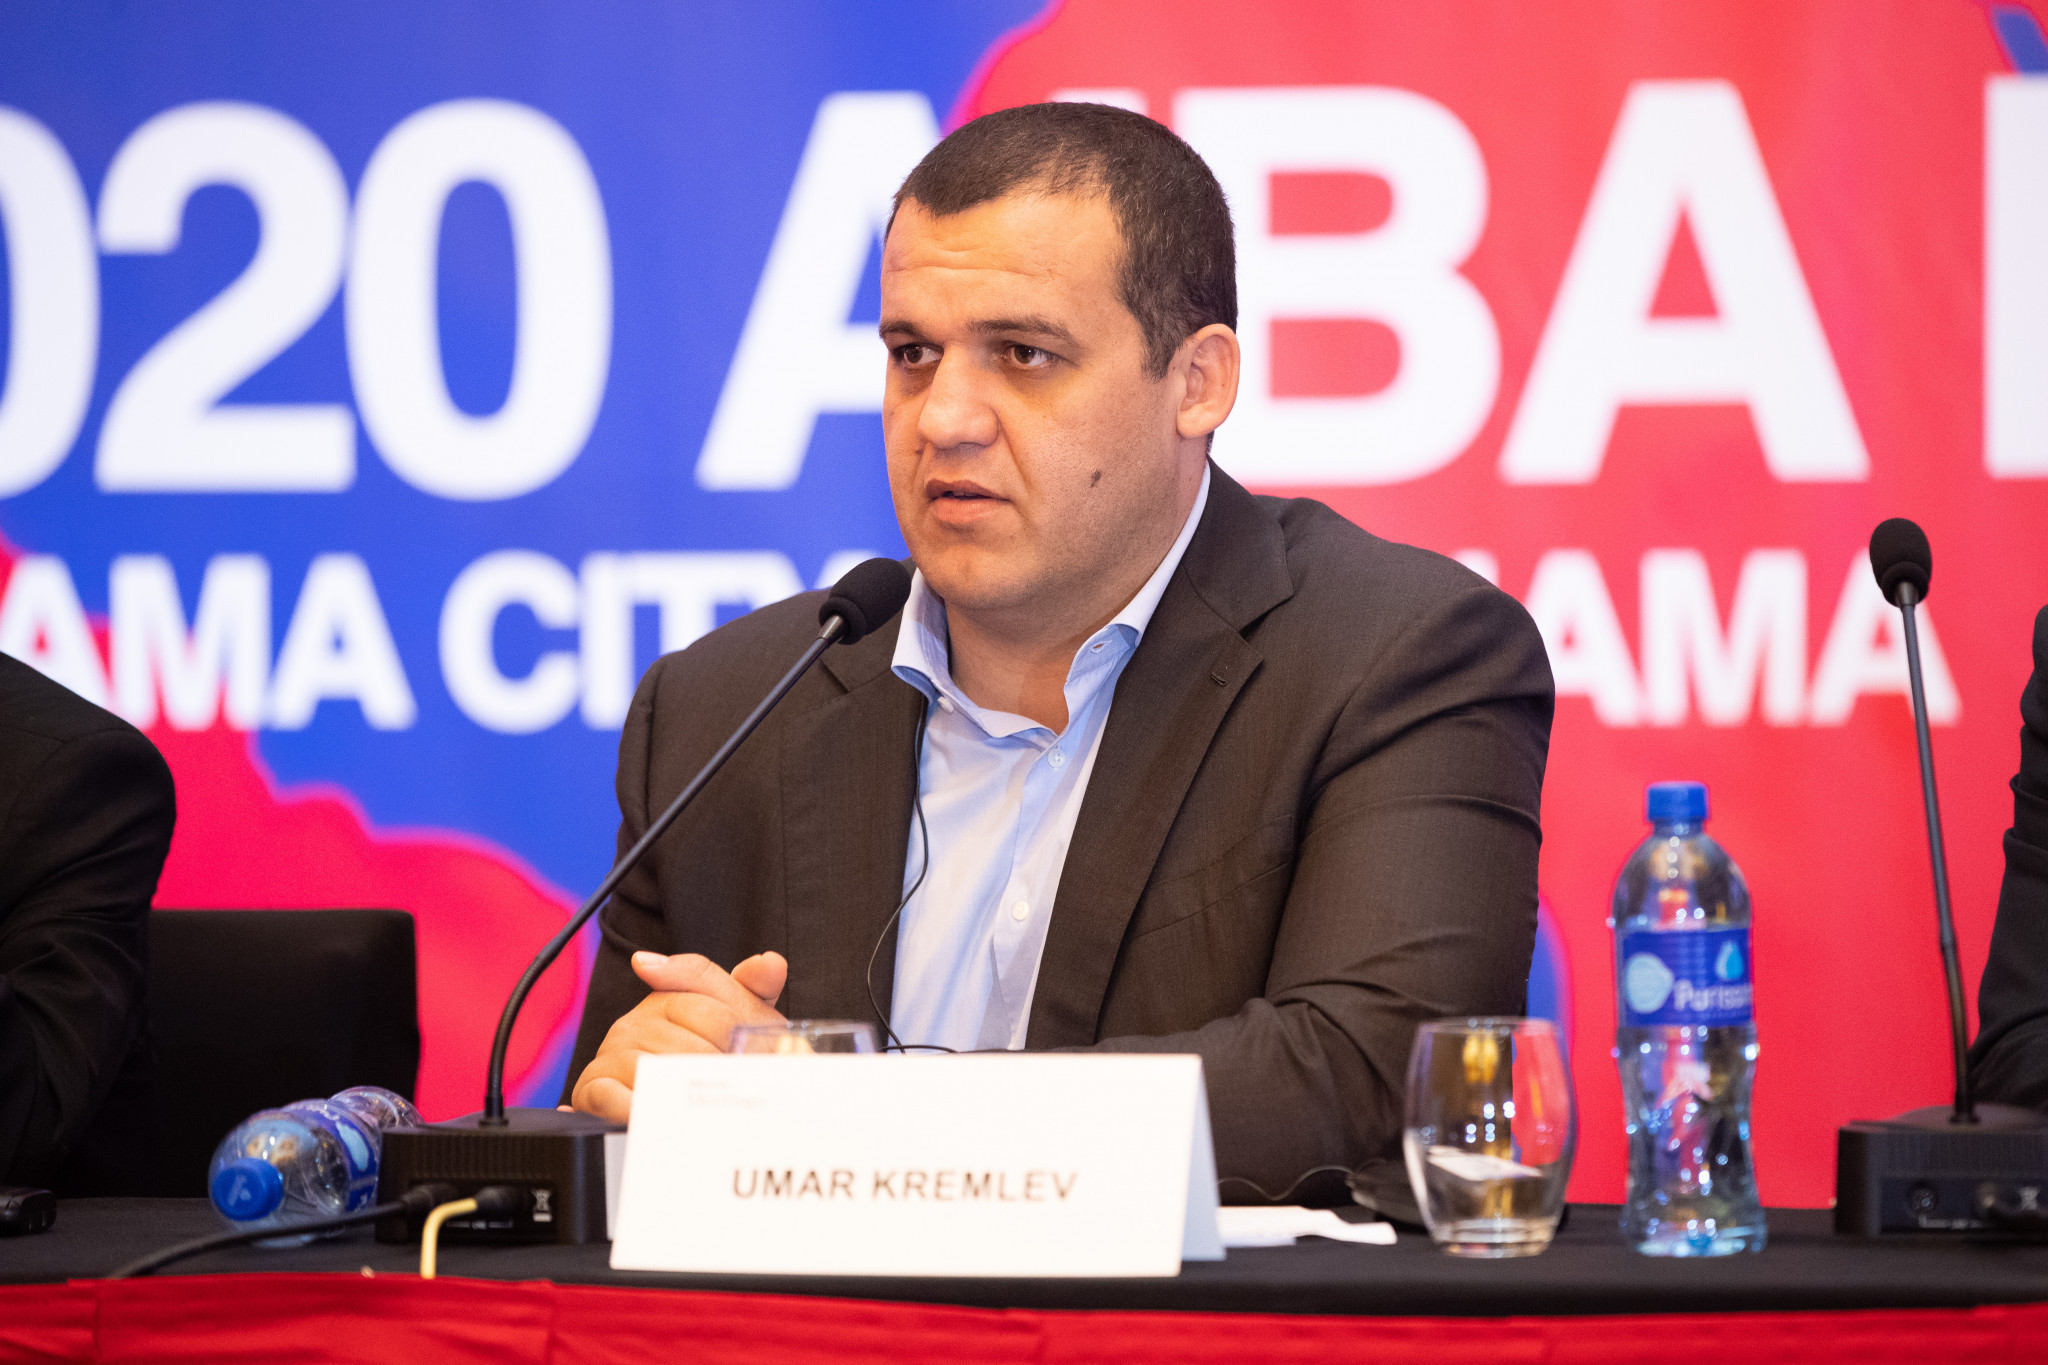 AIBA President Umar Kremlev expressed hope the settling of debts would help ease concerns held by the IOC ©AIBA